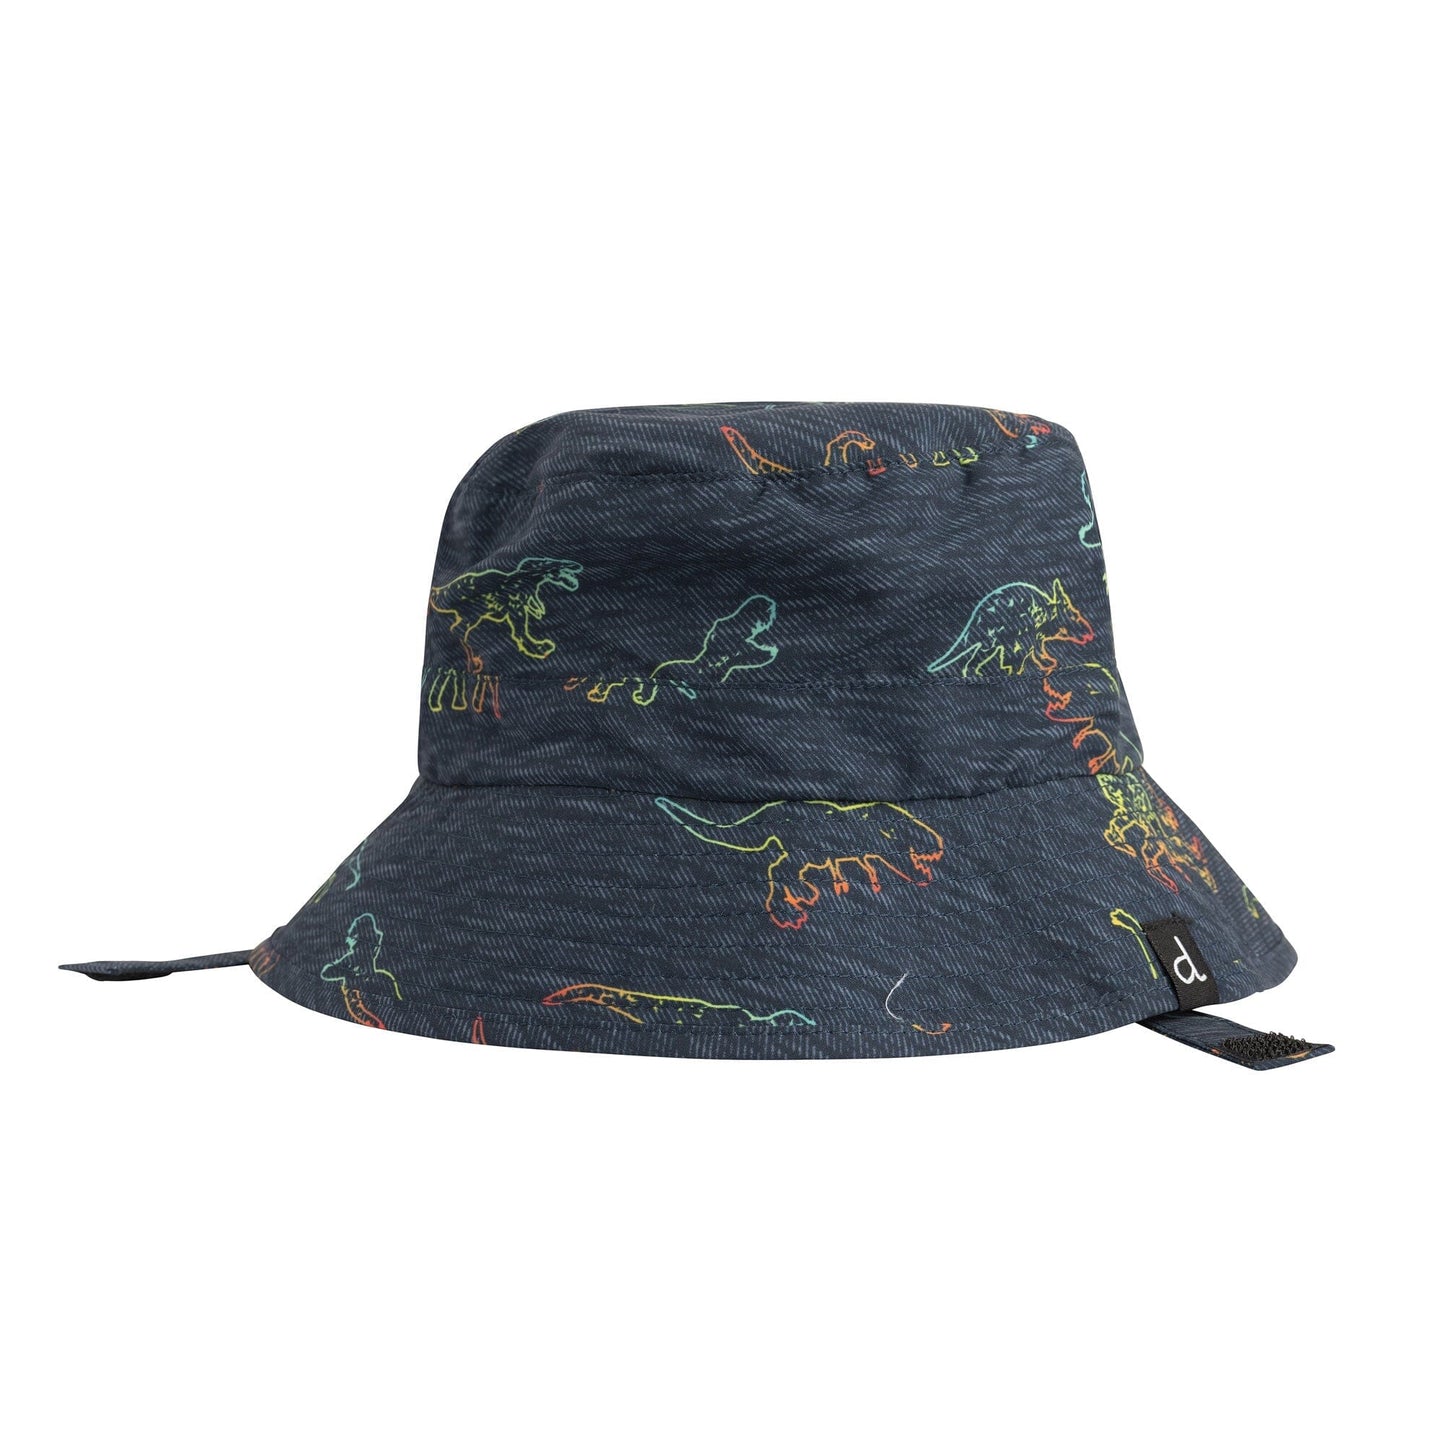 Printed Beach Hat Black Dinosaurs - E30NBC_000